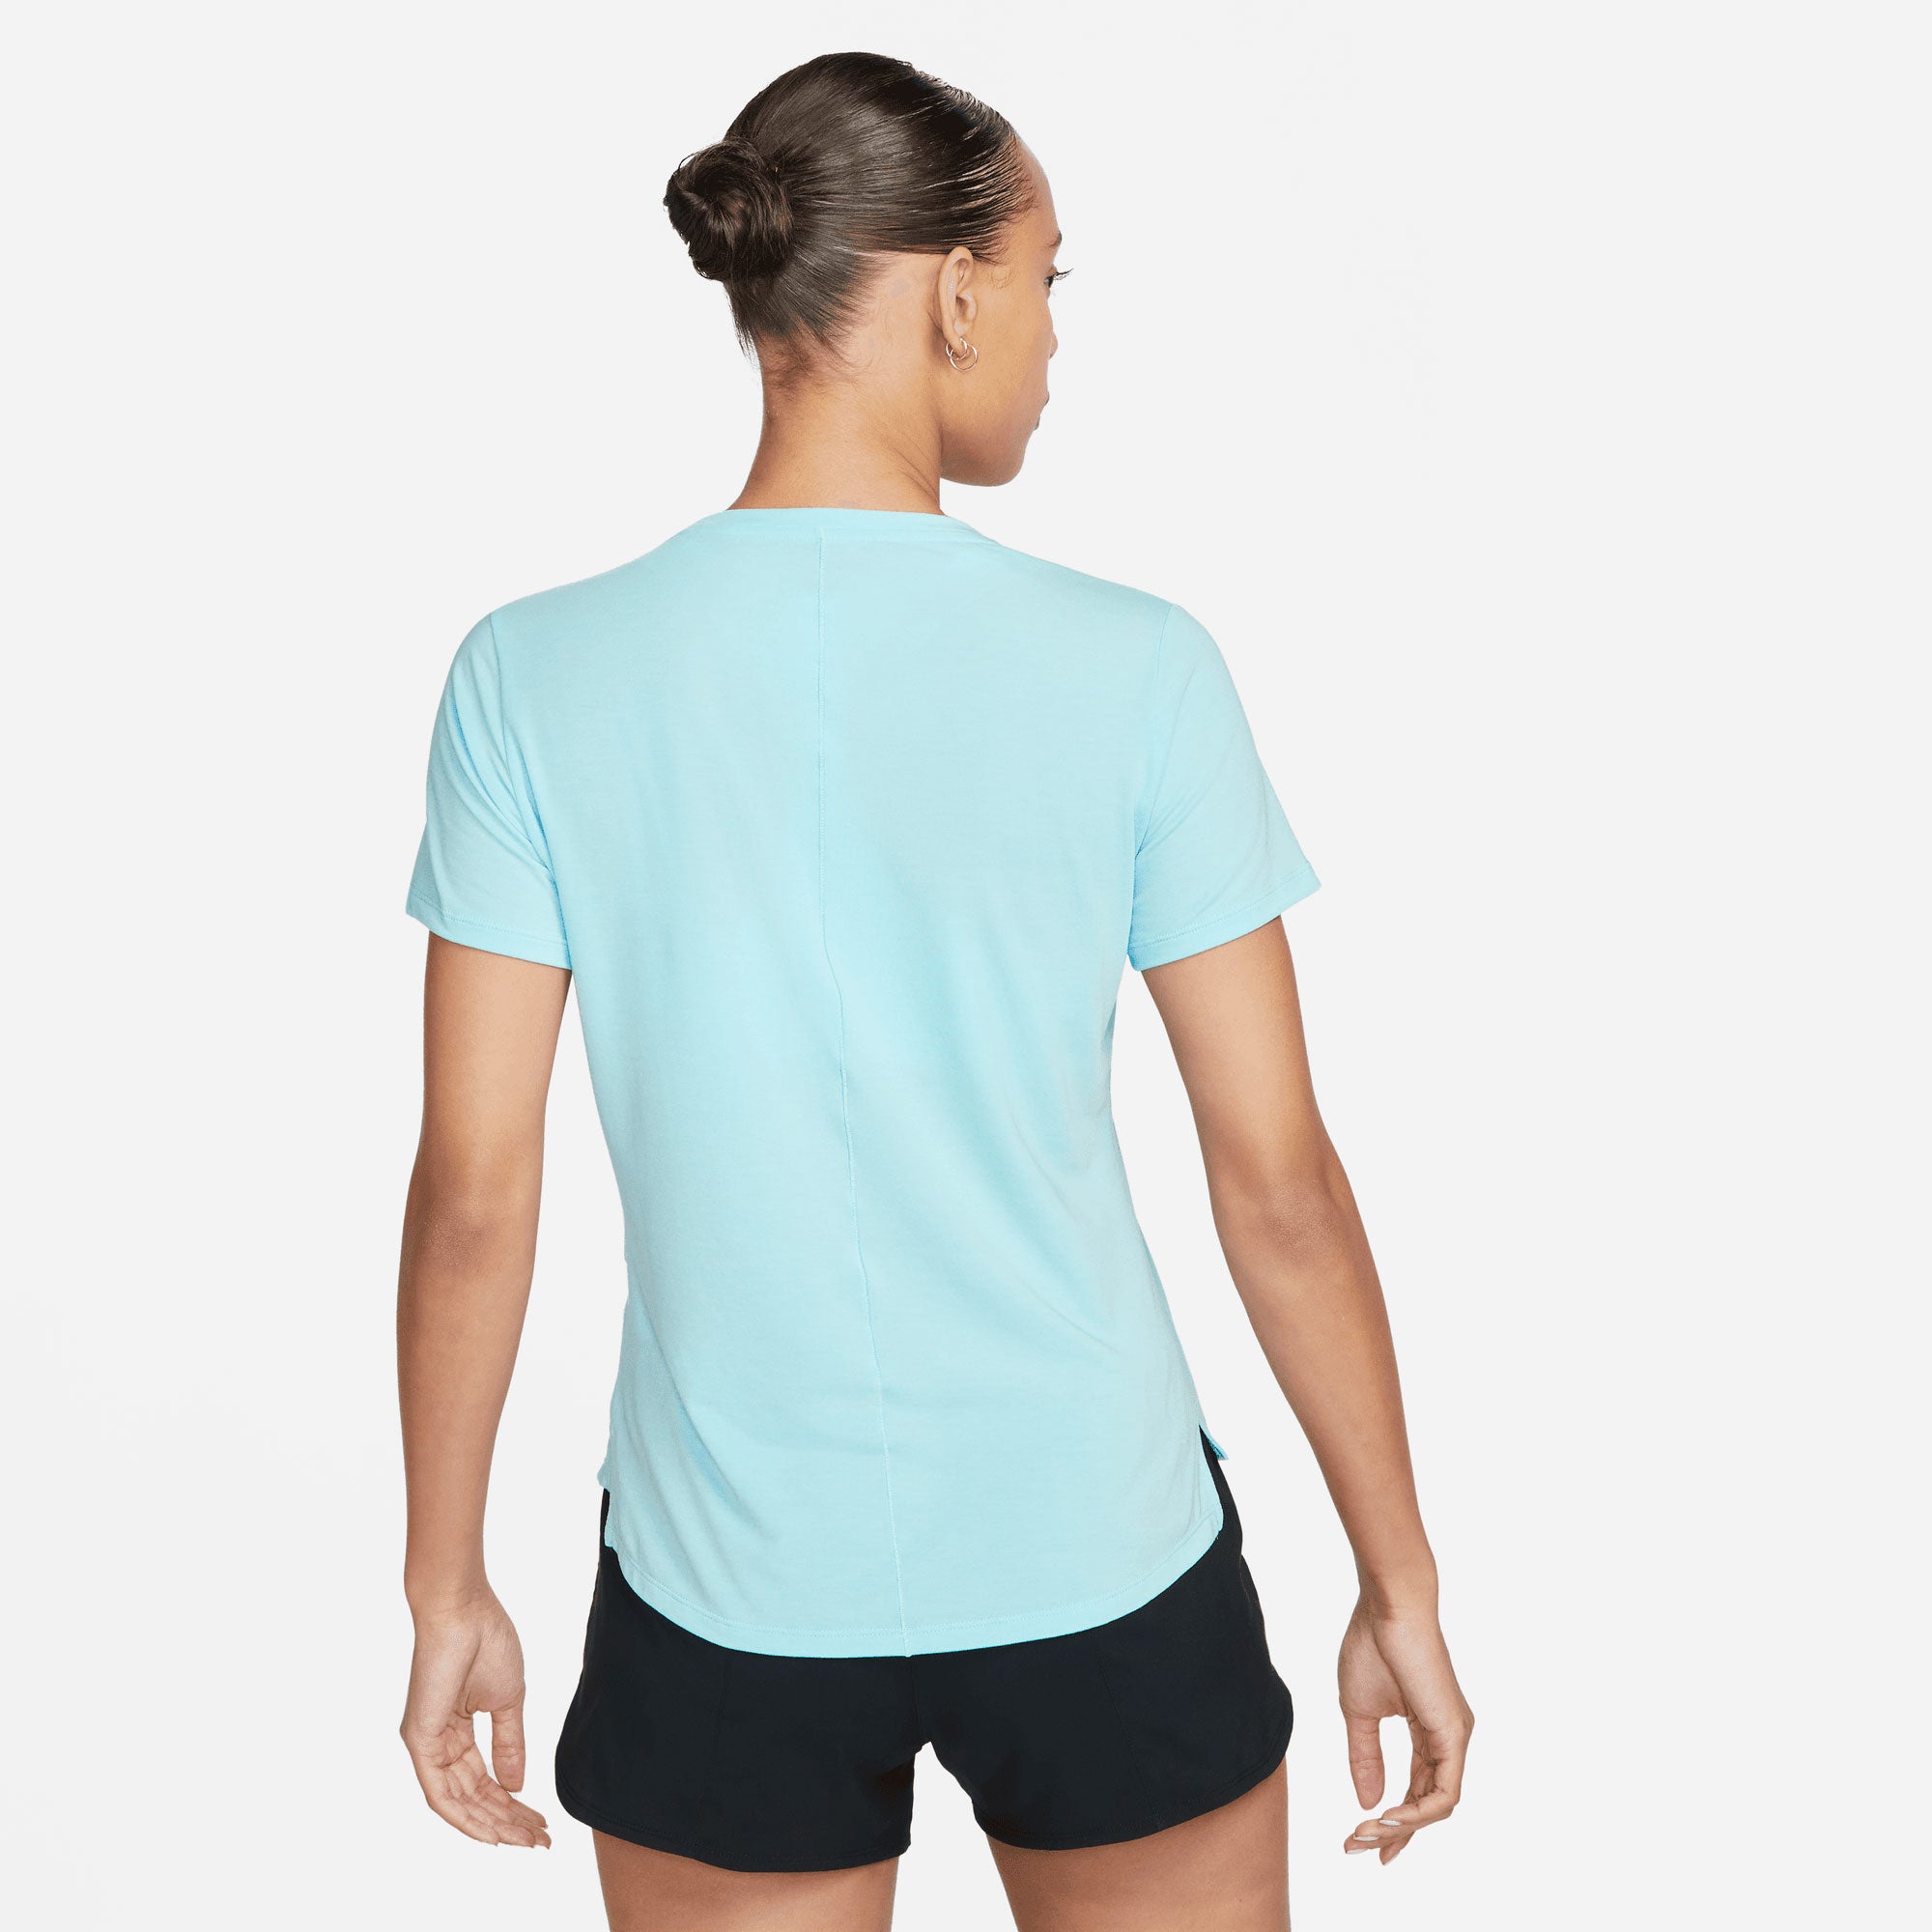 Nike One Luxe Dri-FIT Women's Standard Fit Shirt Blue (2)